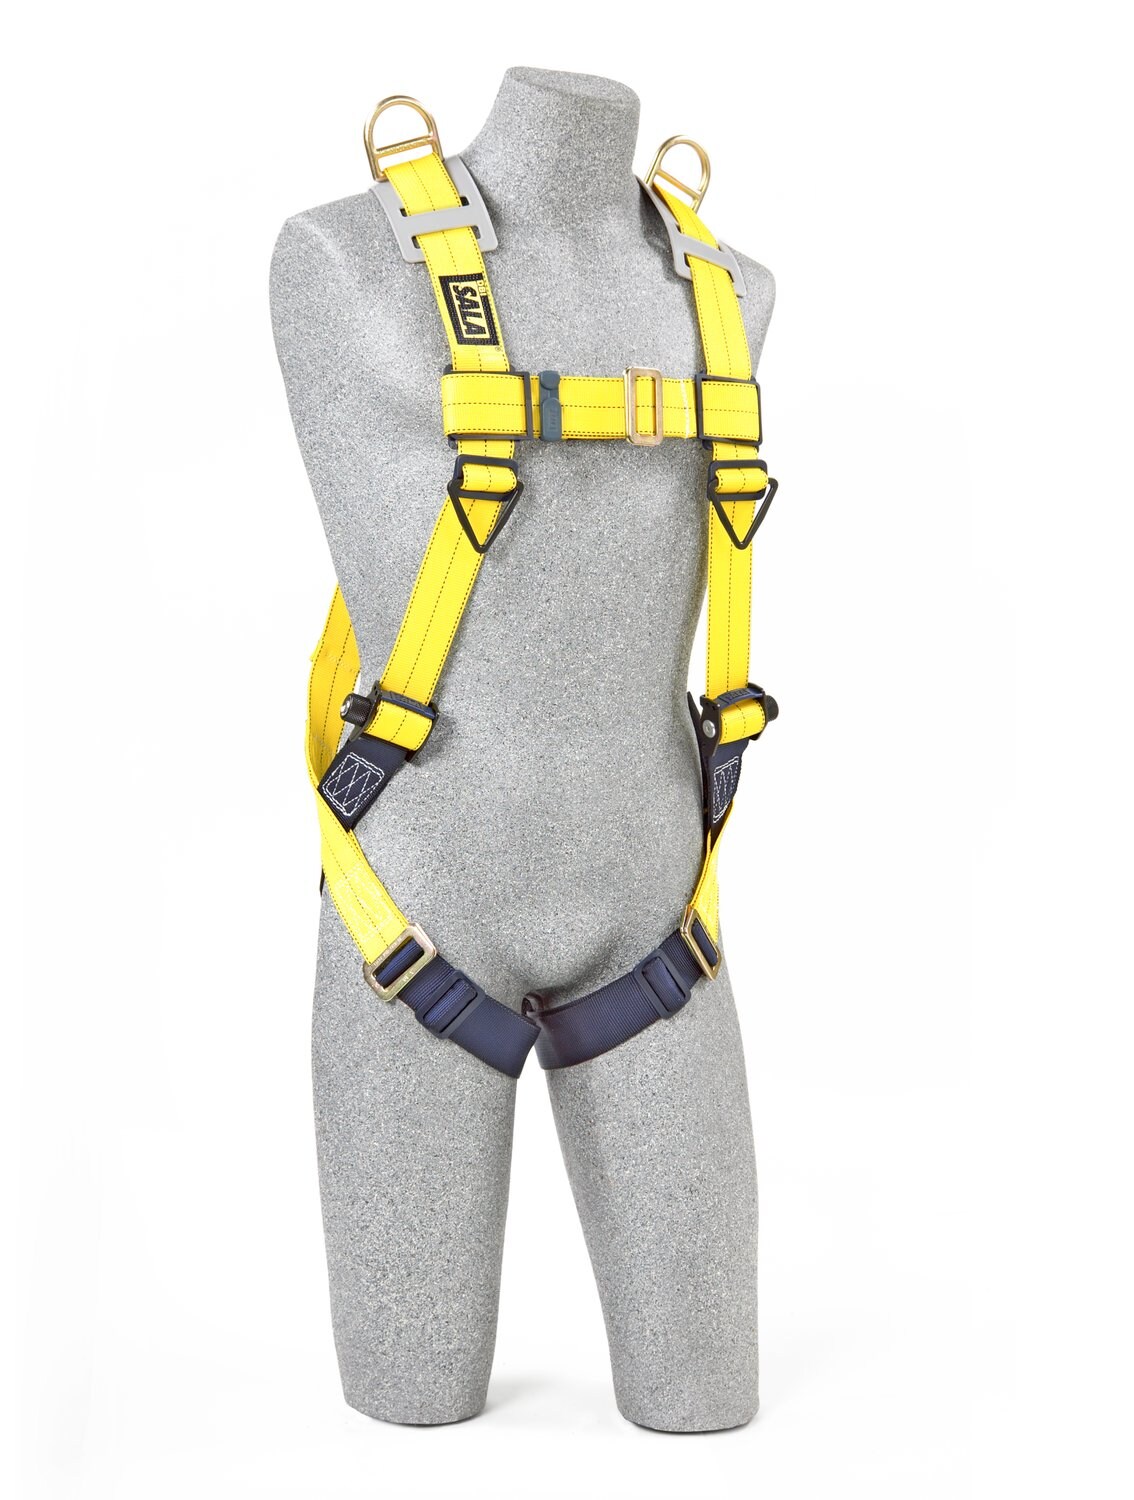 7100262769 - 3M DBI-SALA Delta Vest Retrieval Safety Harness 1101781, Universal